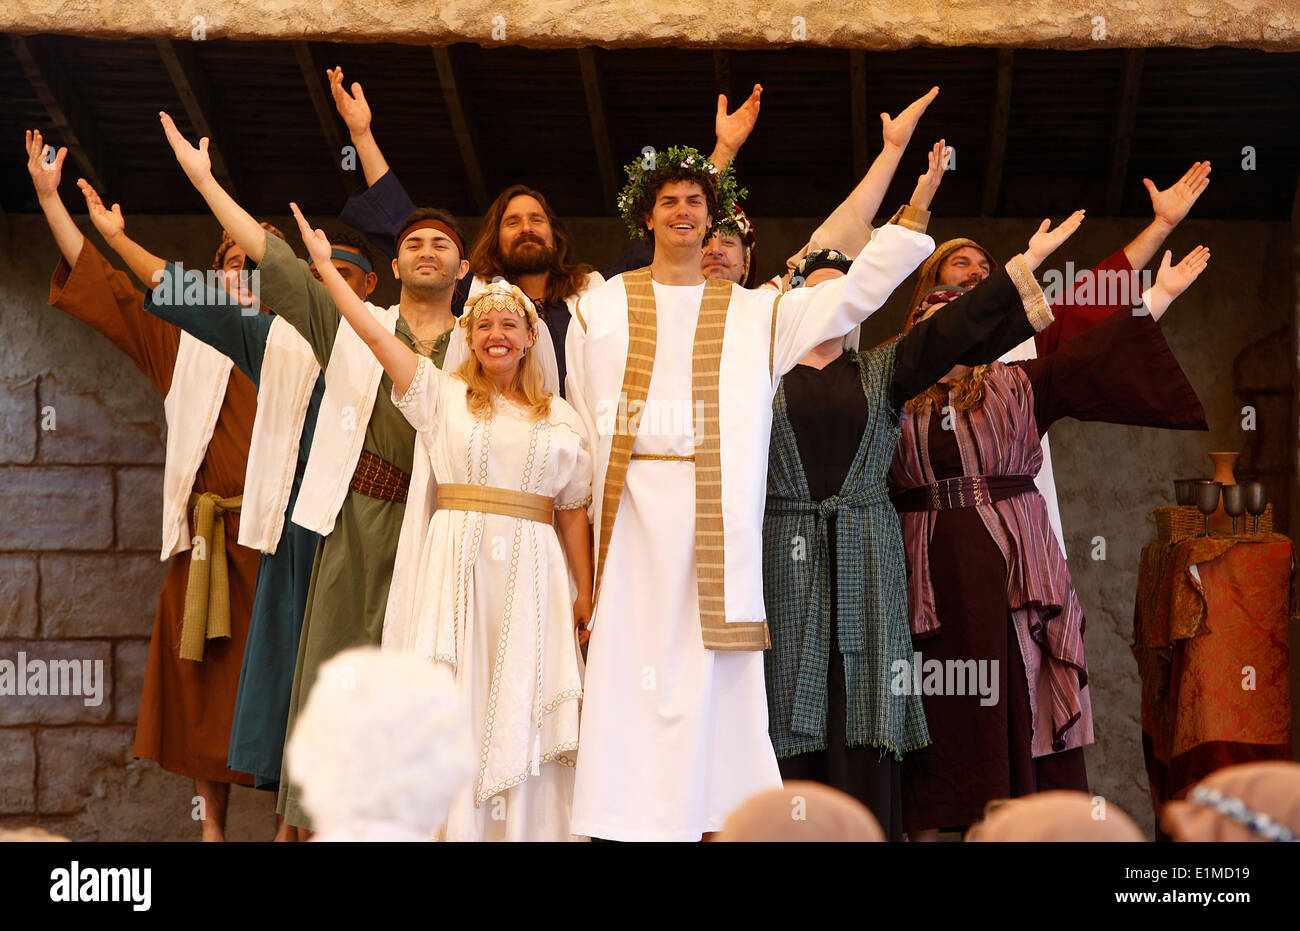 Holy Land Experience : the wedding at Cana Stock Photo